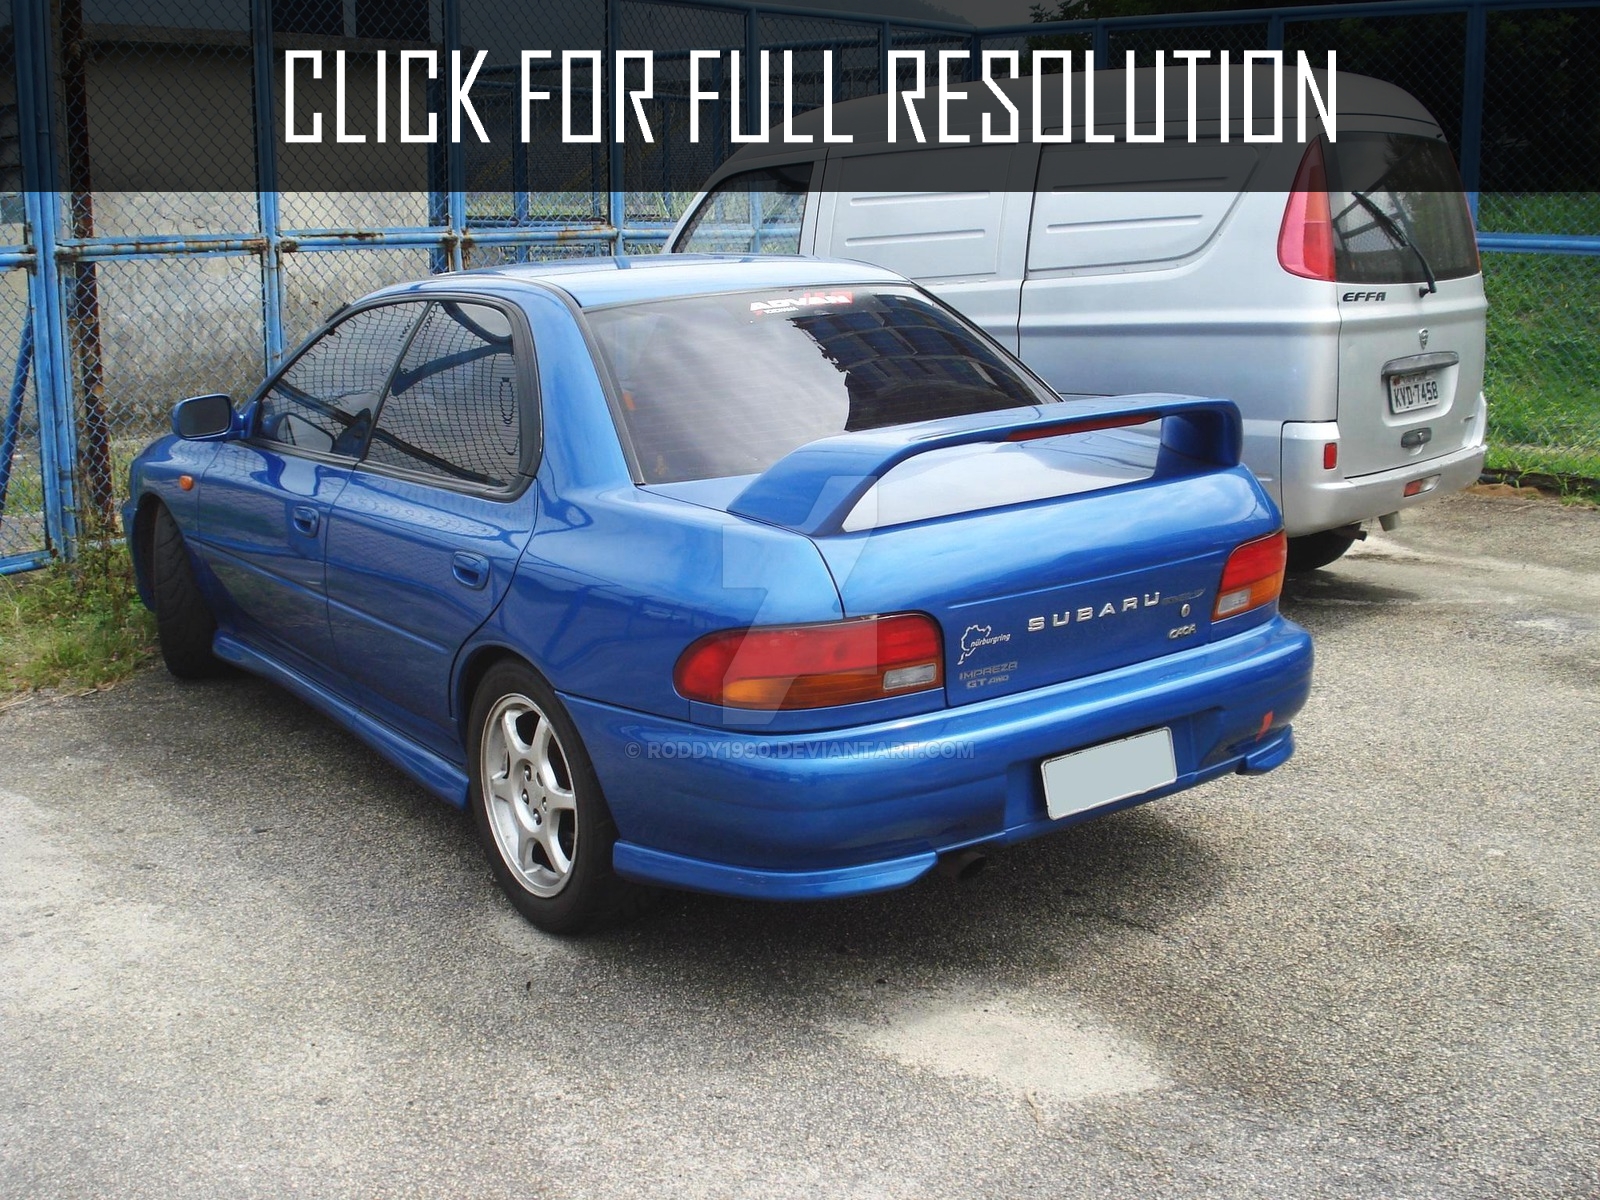 2000 Subaru Impreza Gt